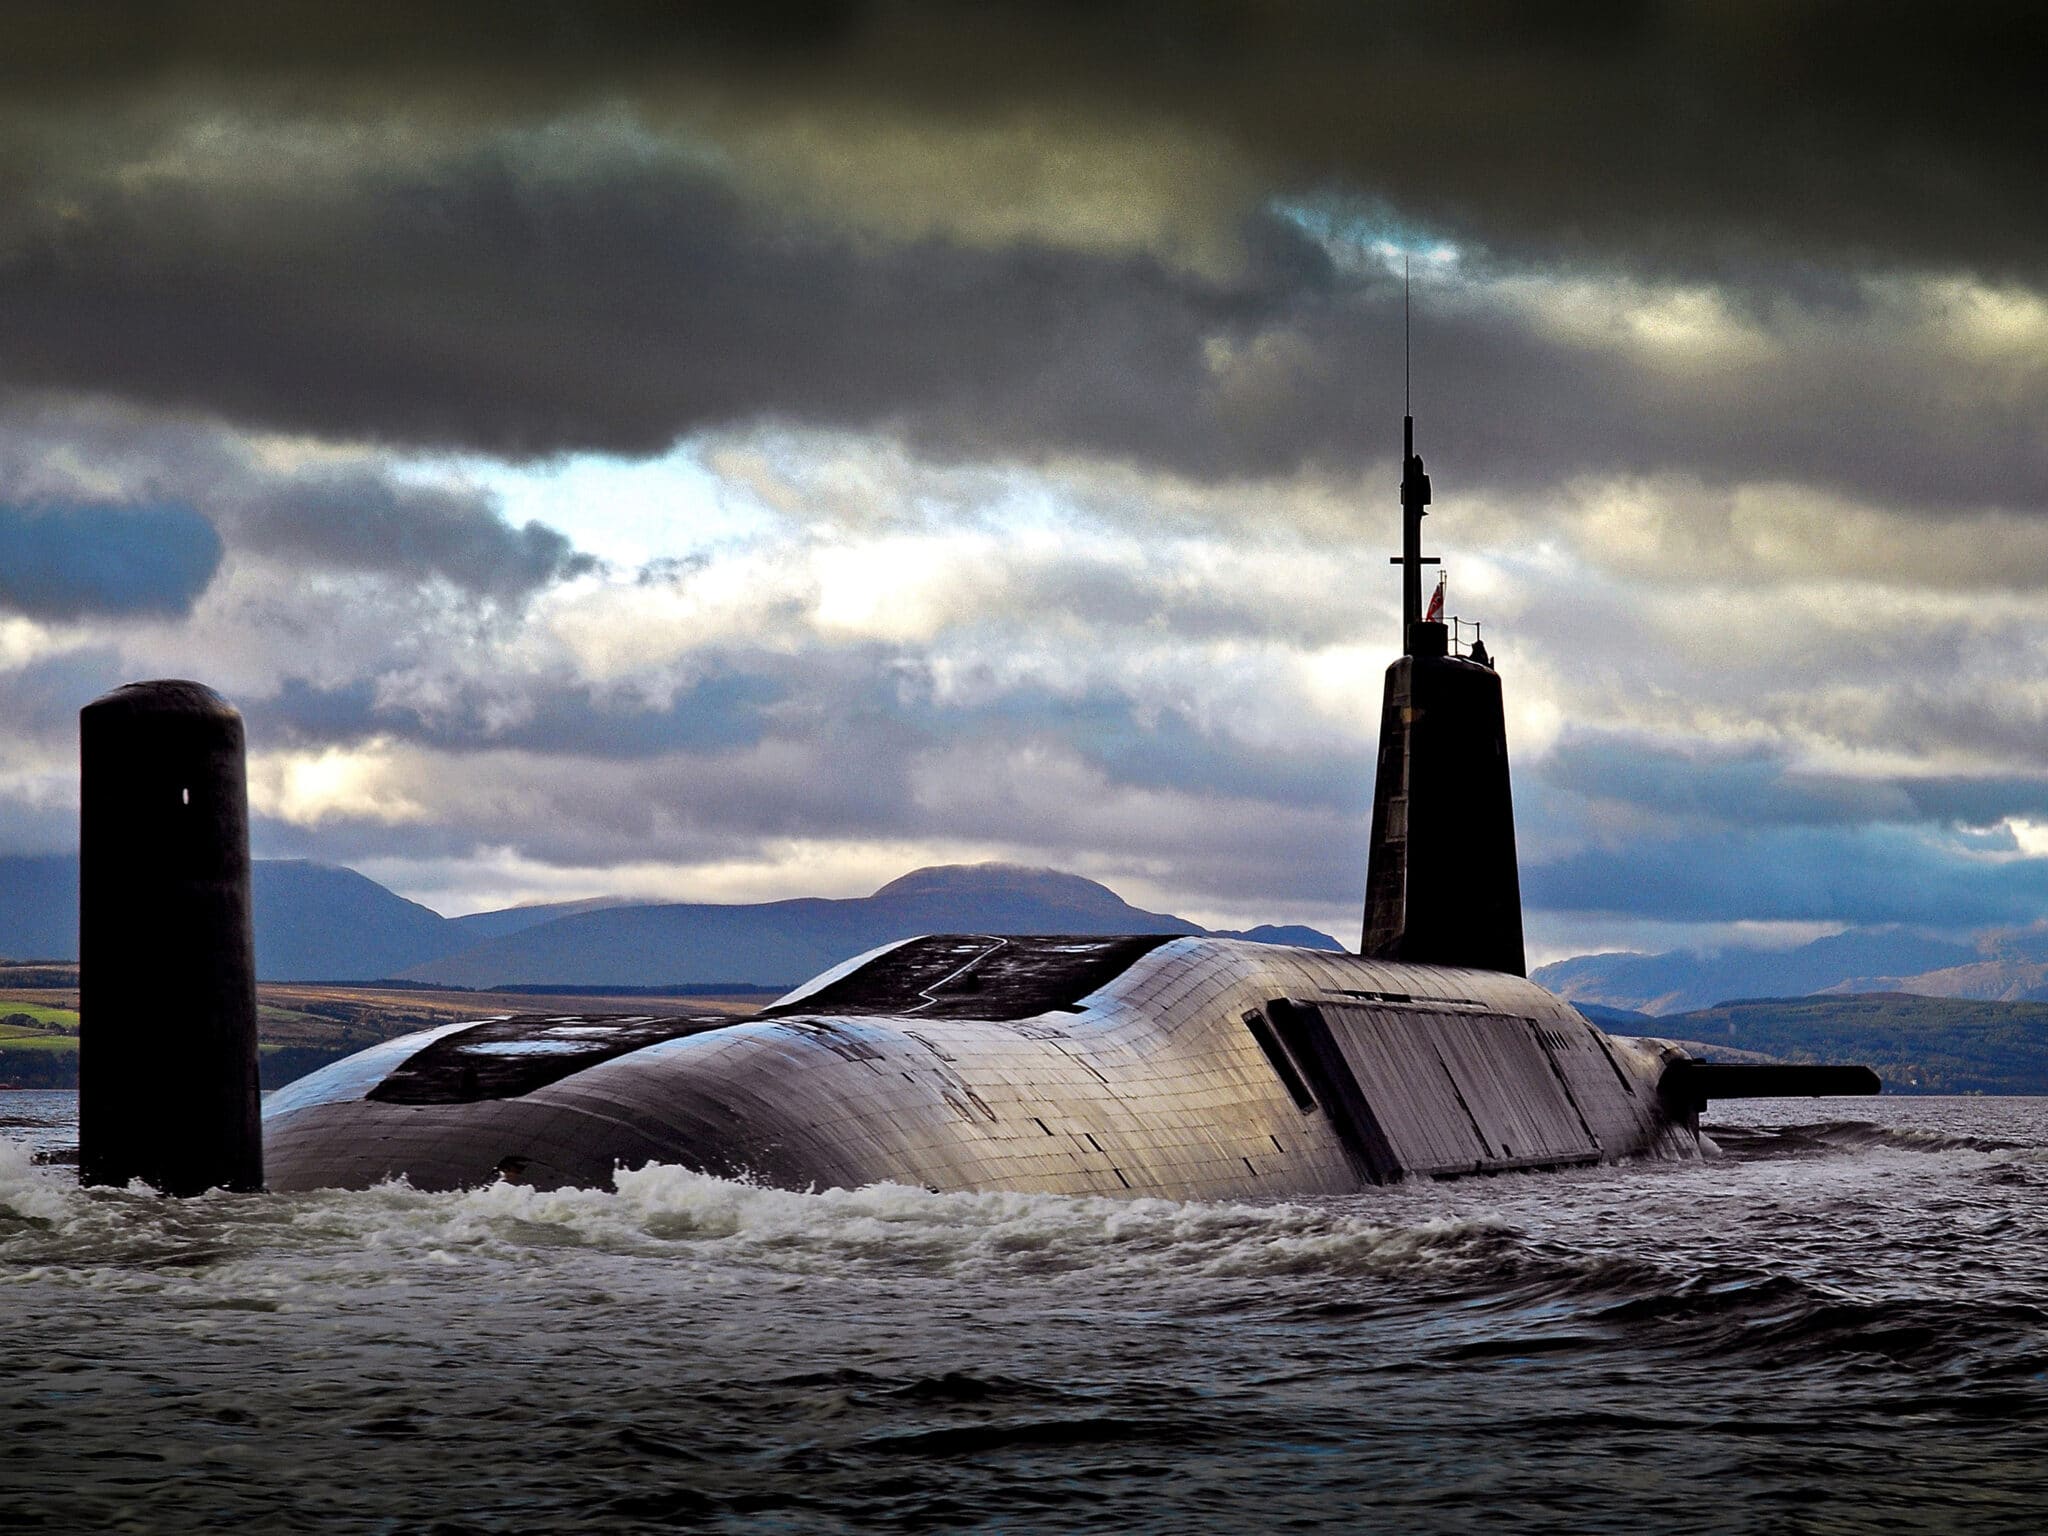 dreadnought class submarine